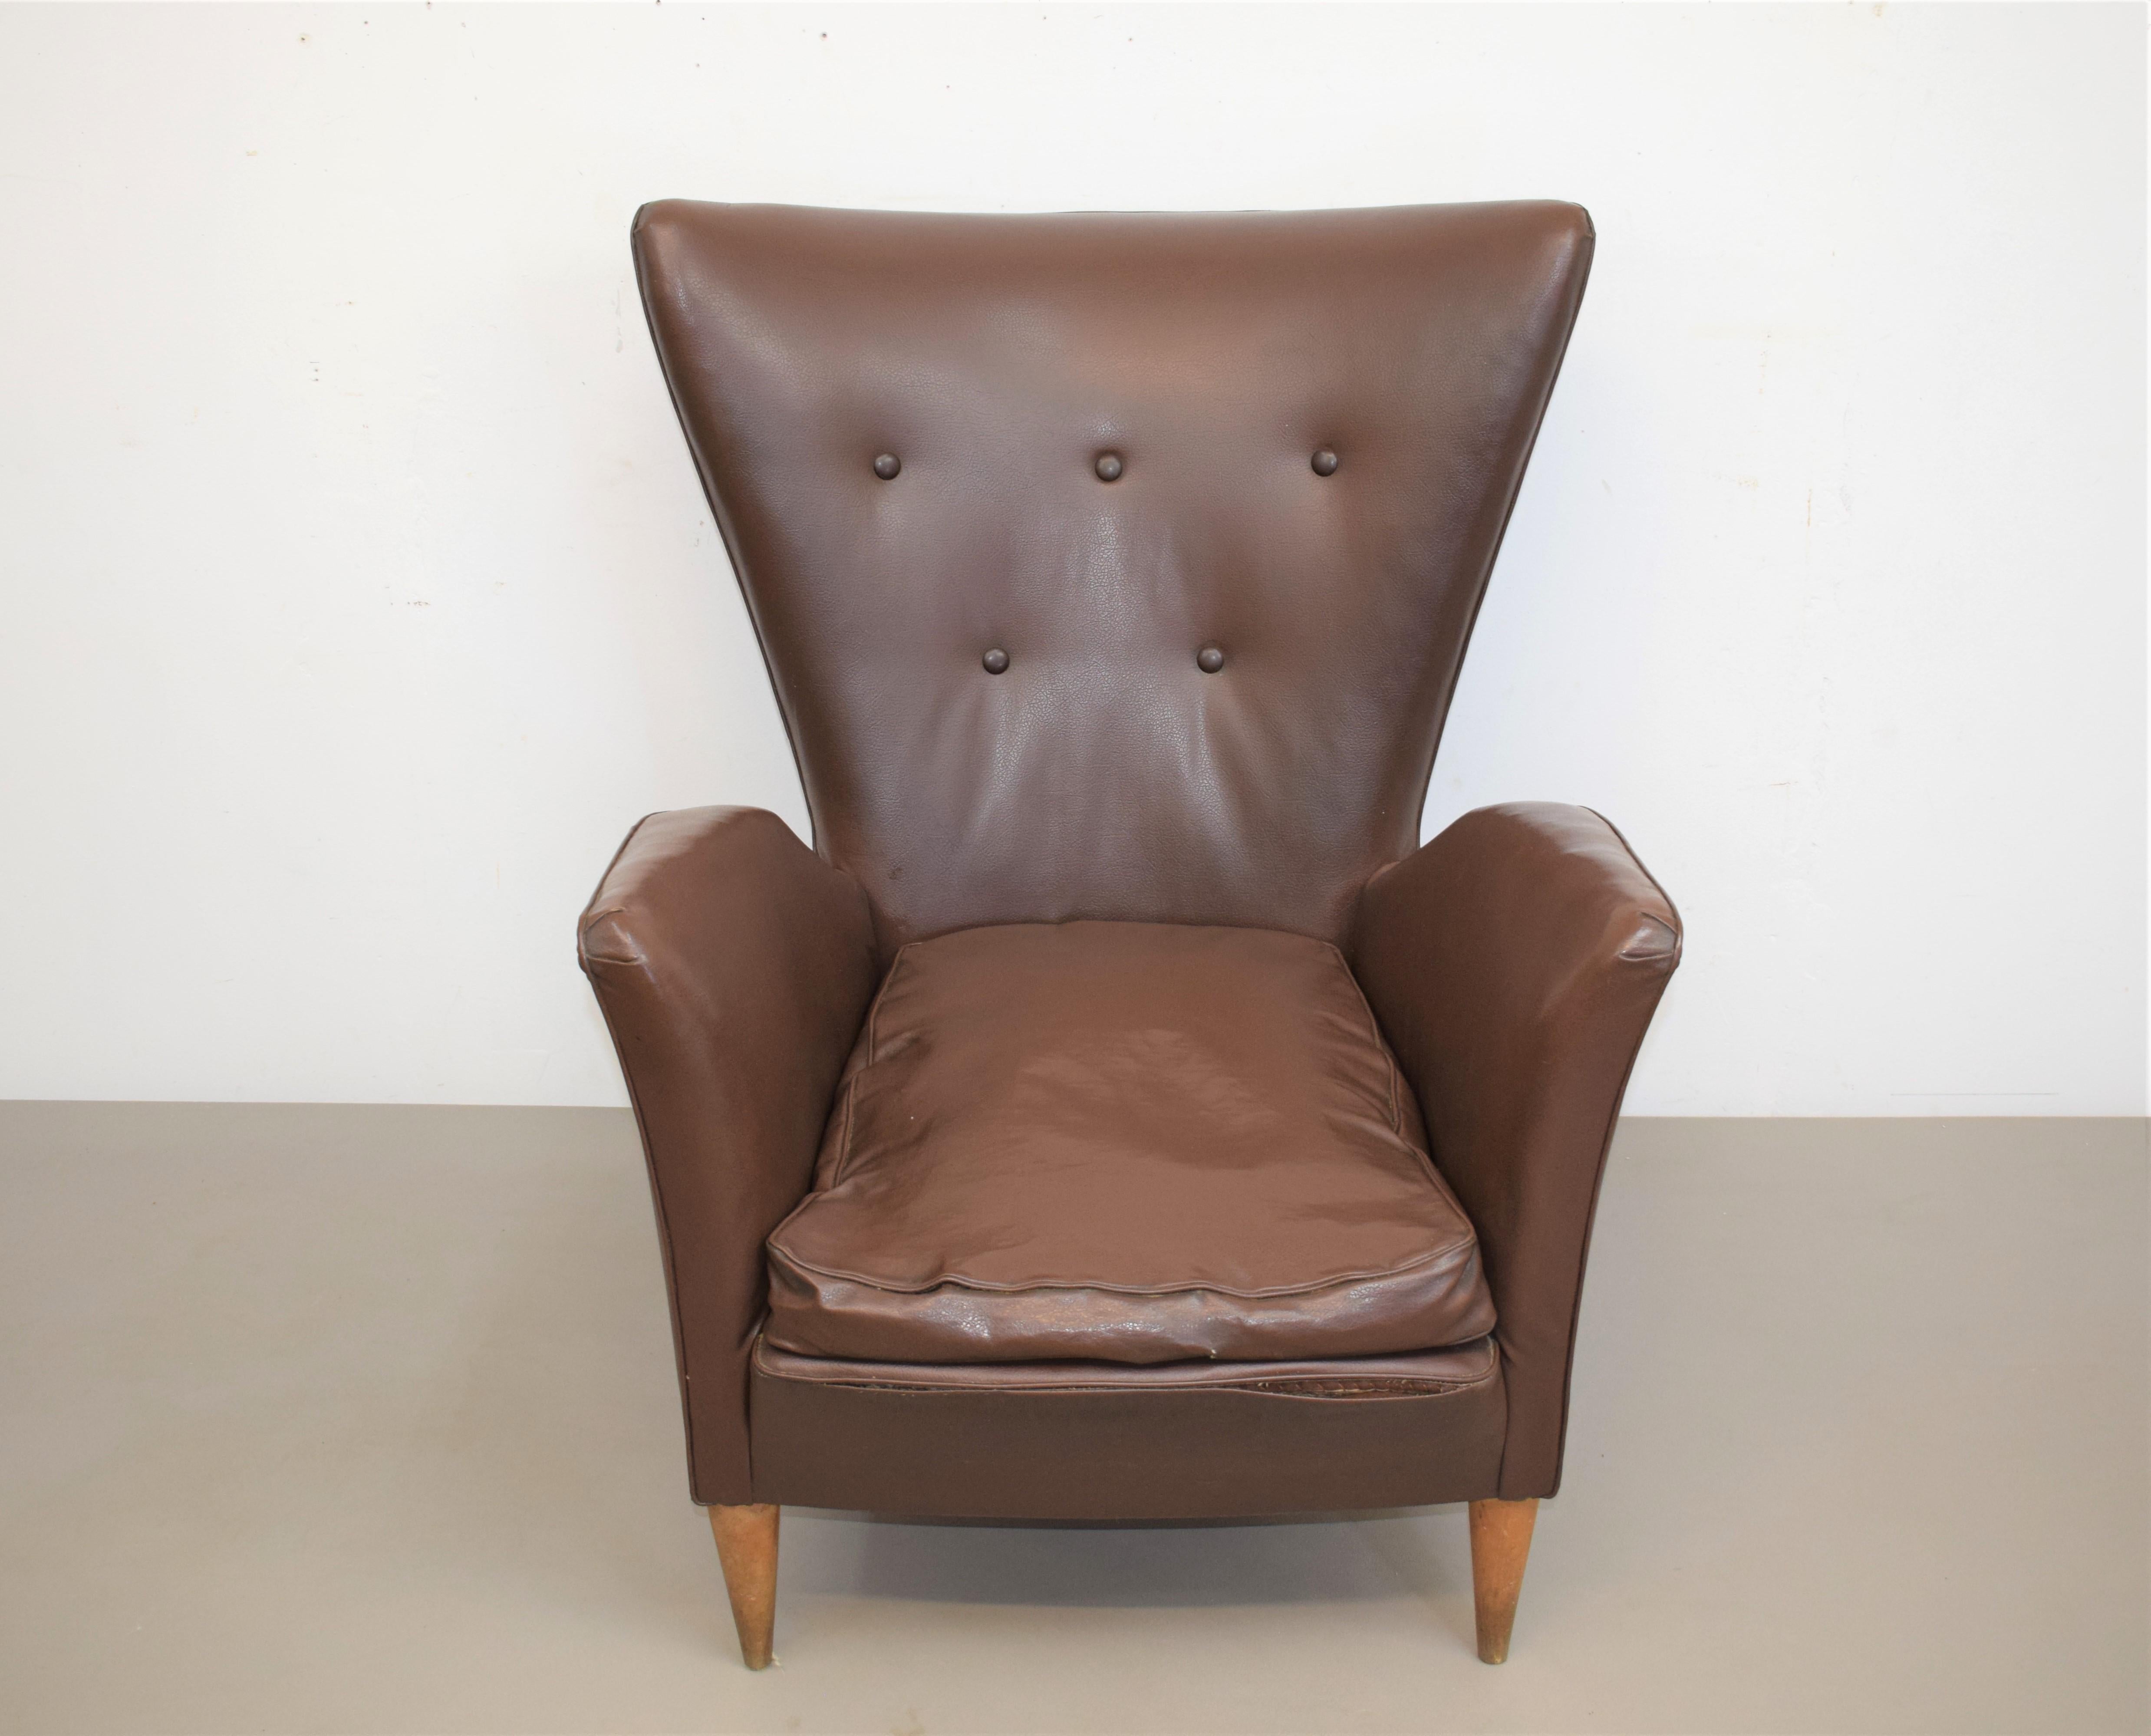 Italian armchair, Gio Ponti style, 1950s.
Dimensions: H=84 cm; W=74 cm; D= 71 cm; Height seat = 35 cm.